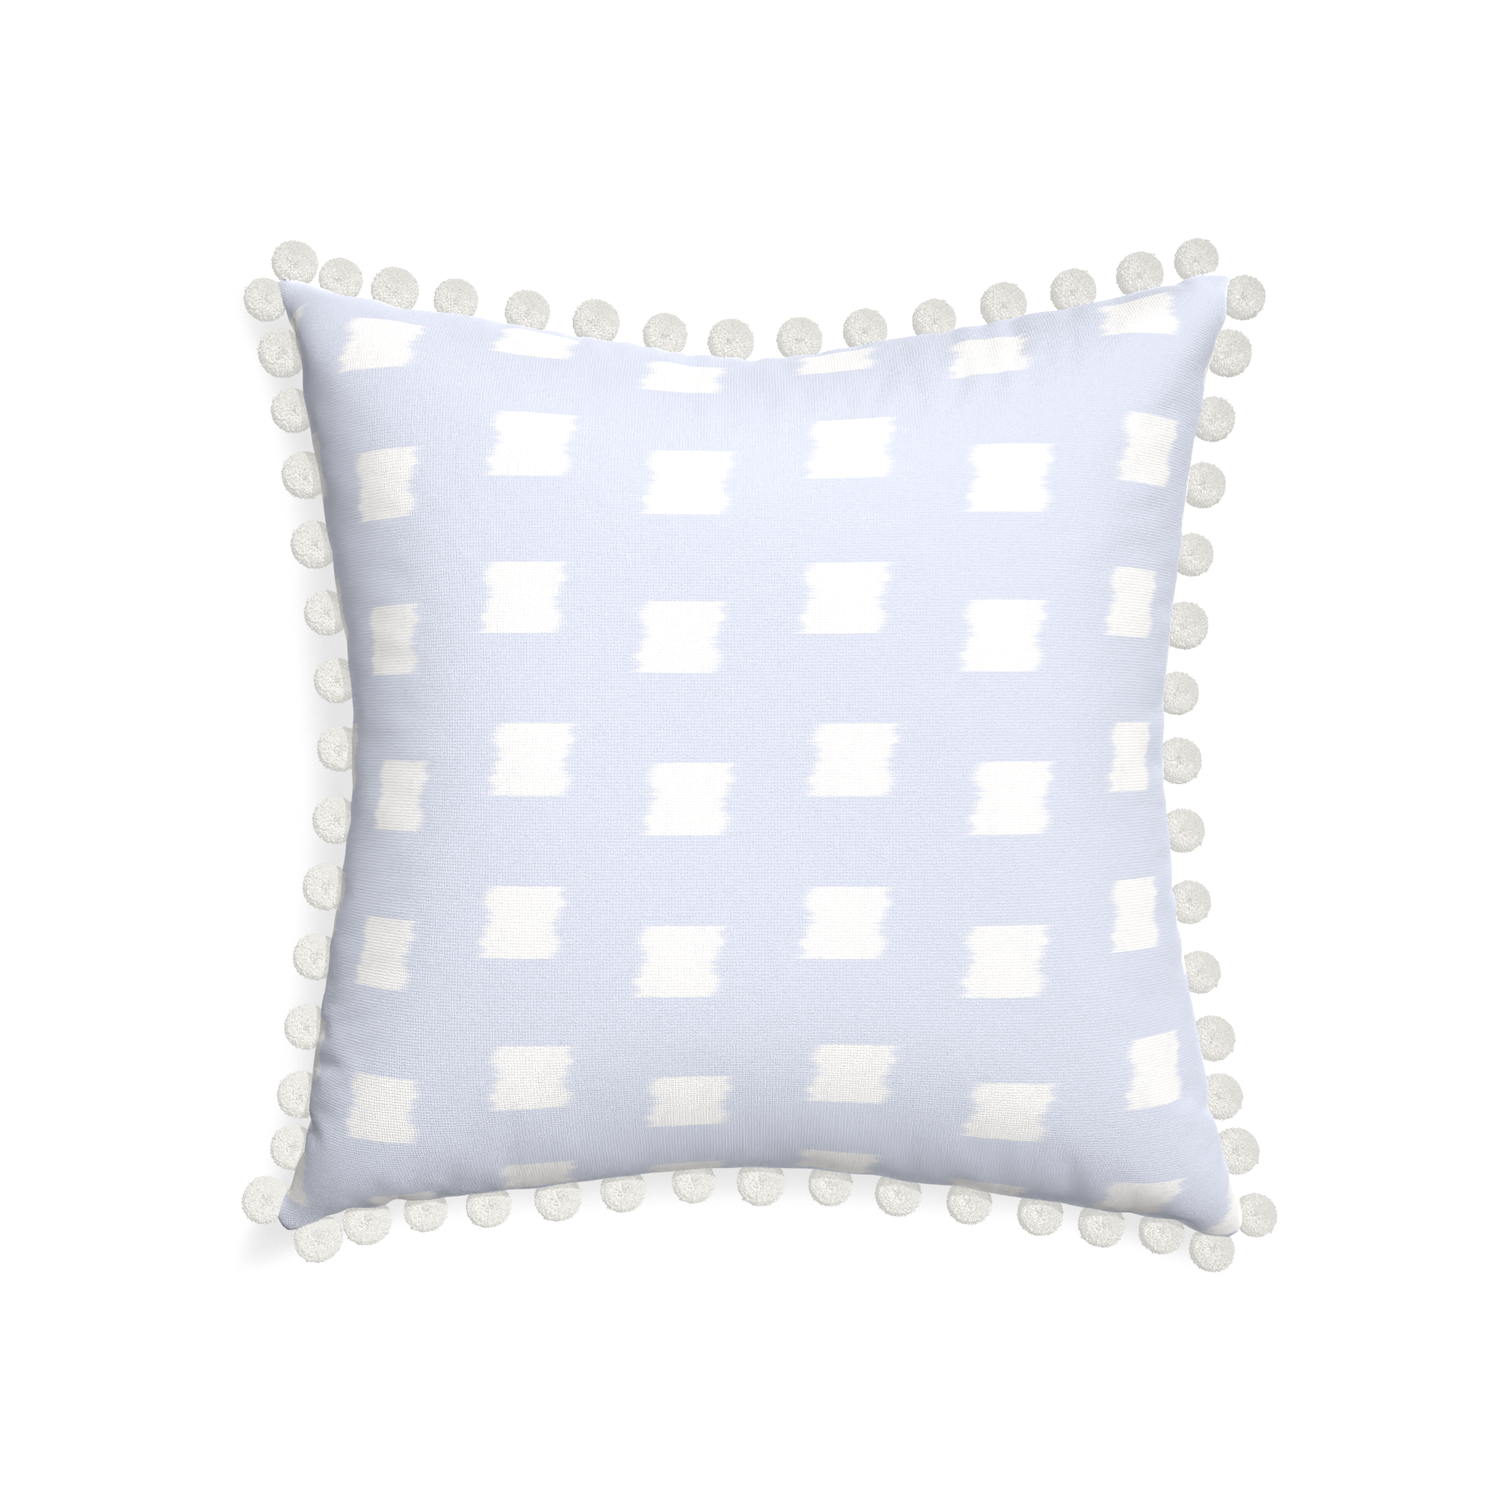 22-square denton custom sky blue patternpillow with snow pom pom on white background